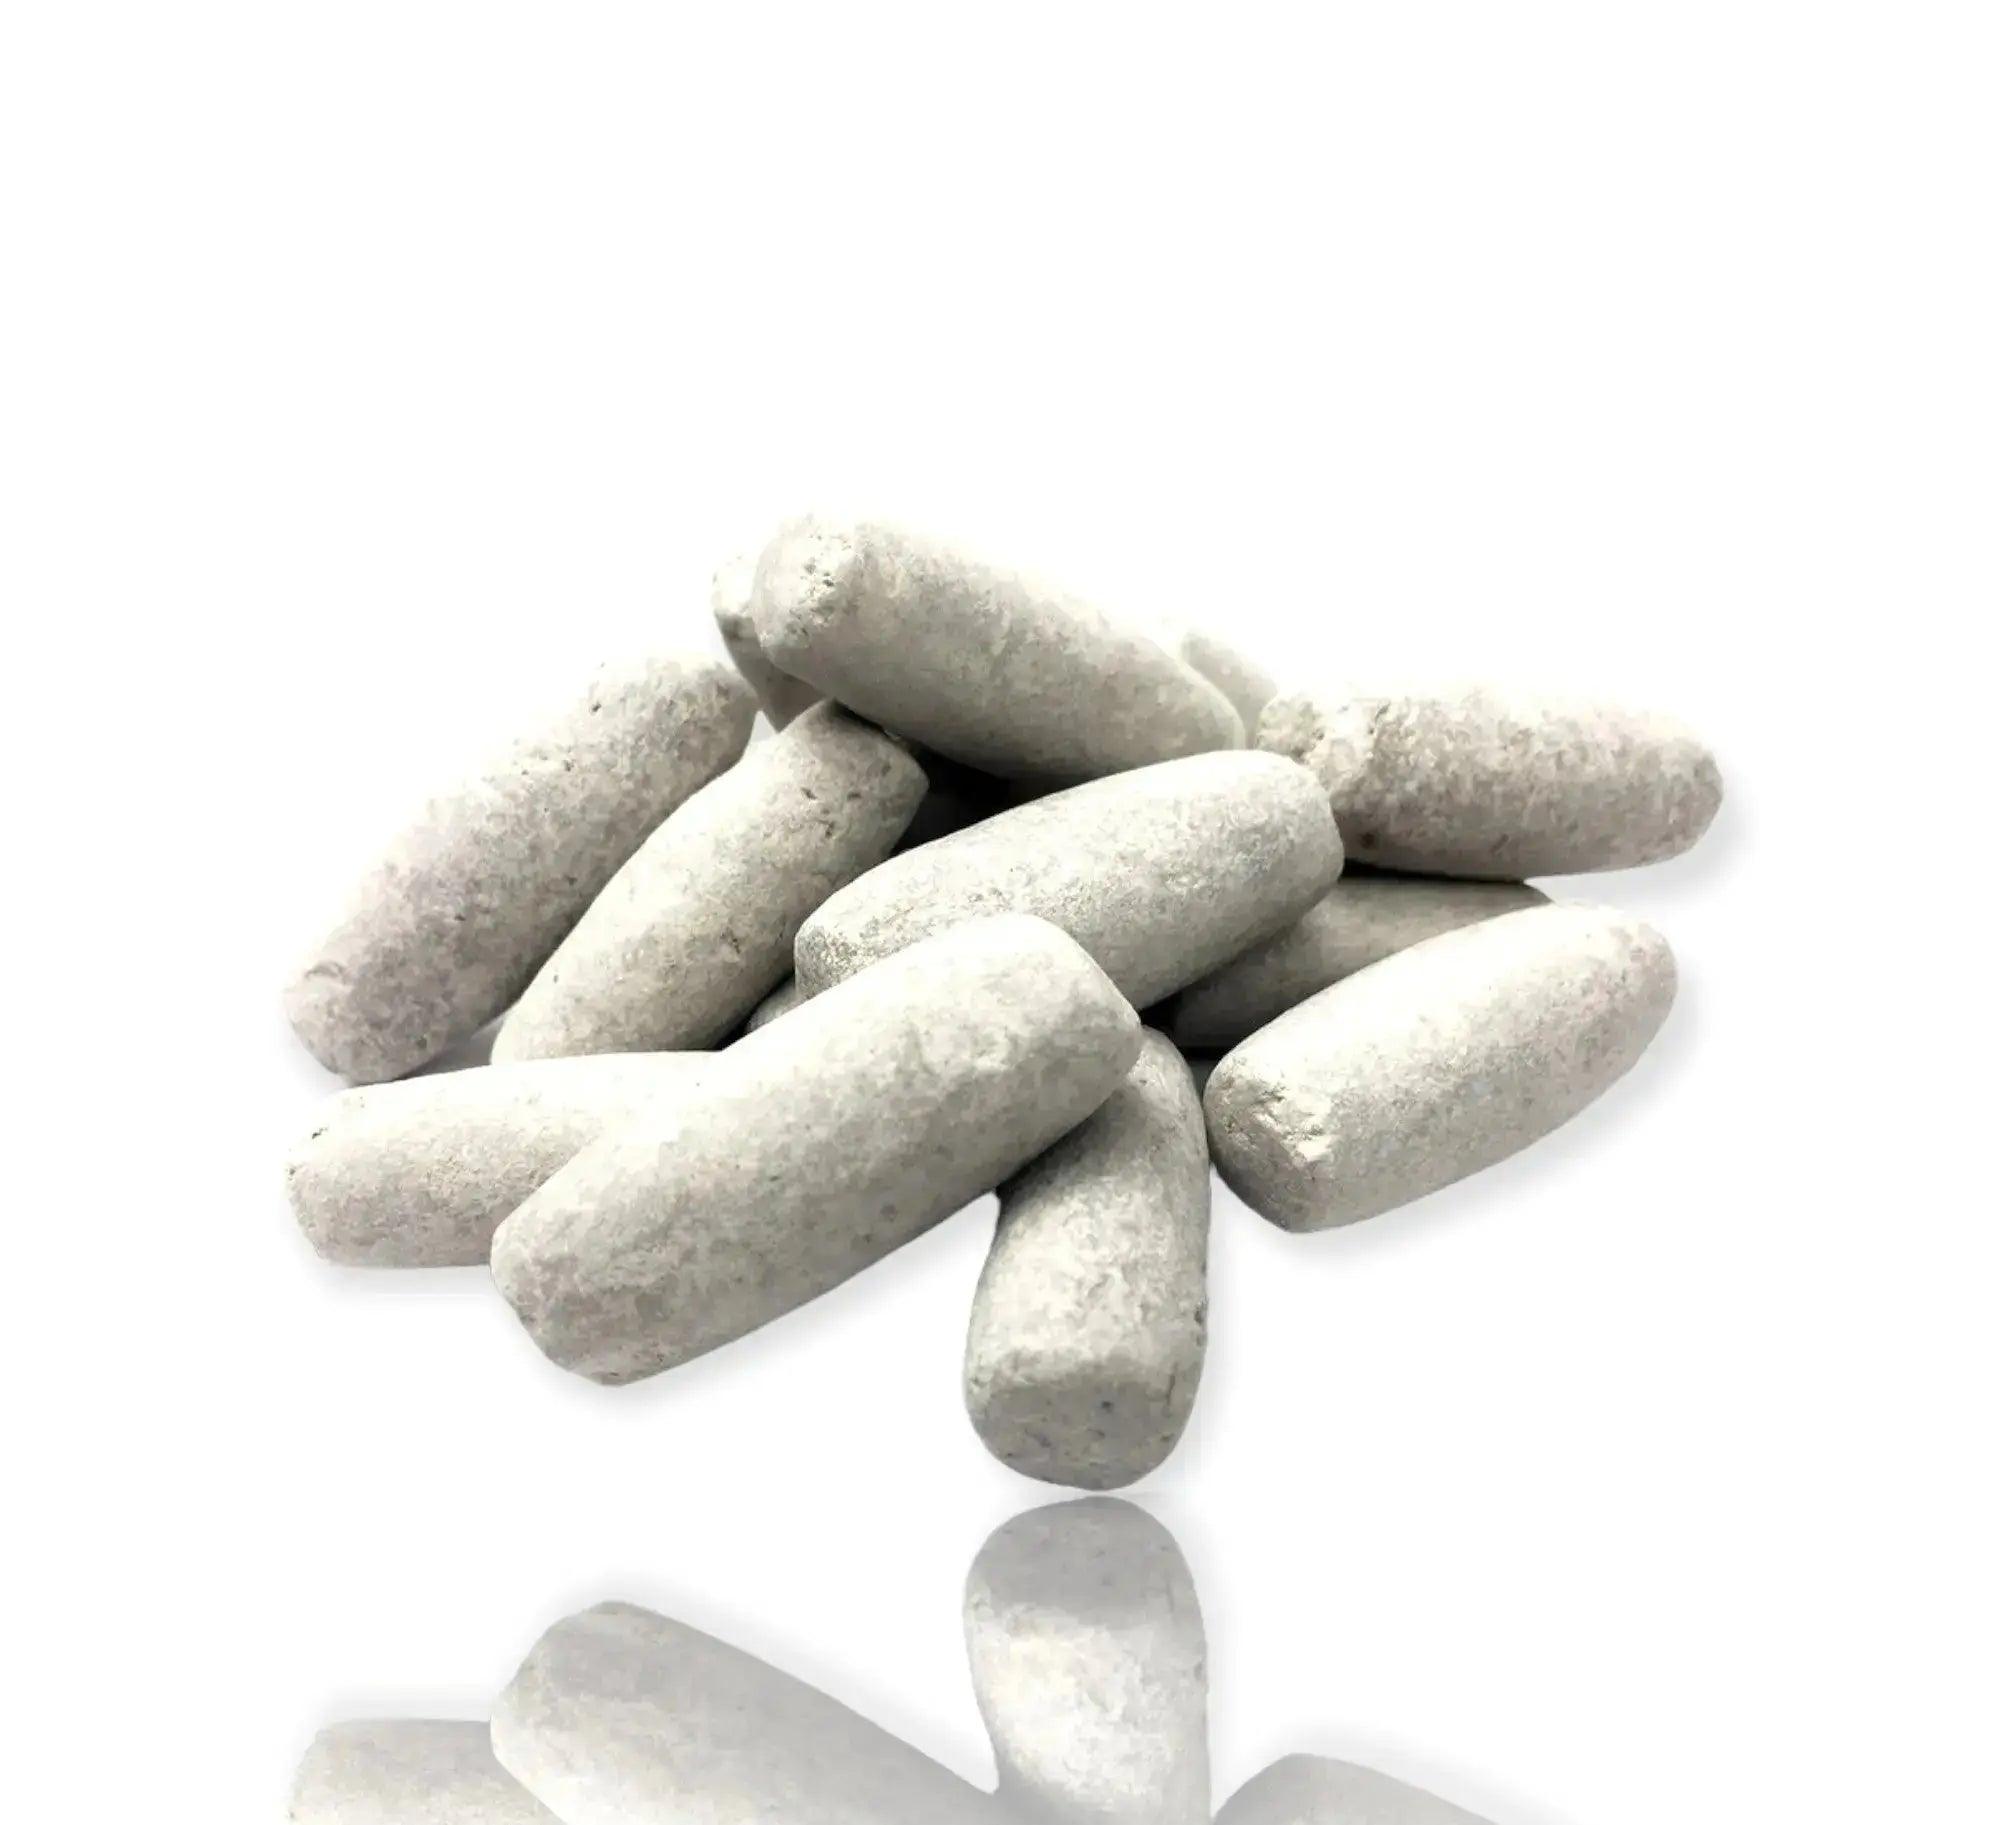 Edible Bentonite Medical Smoked Cla - Honesty Sales U.K